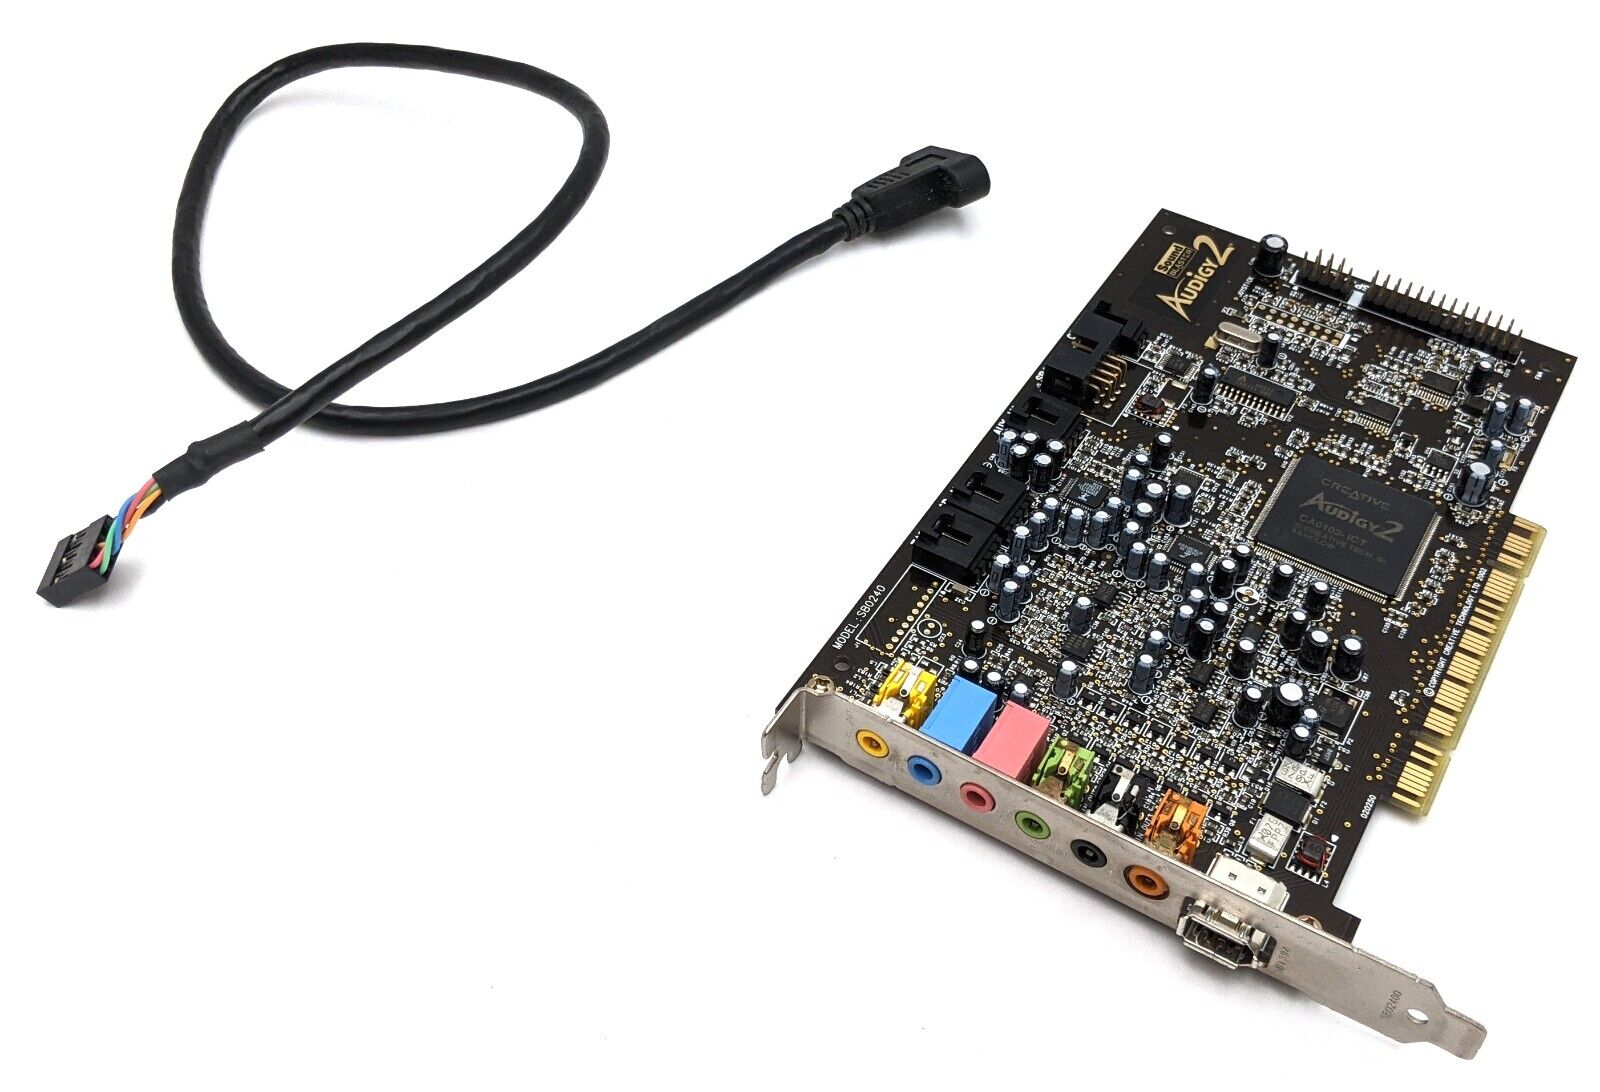 VTG Creative Sound Blaster Audigy 2 6.1 PCI Sound Card SB0240 w/ FireWire Cable